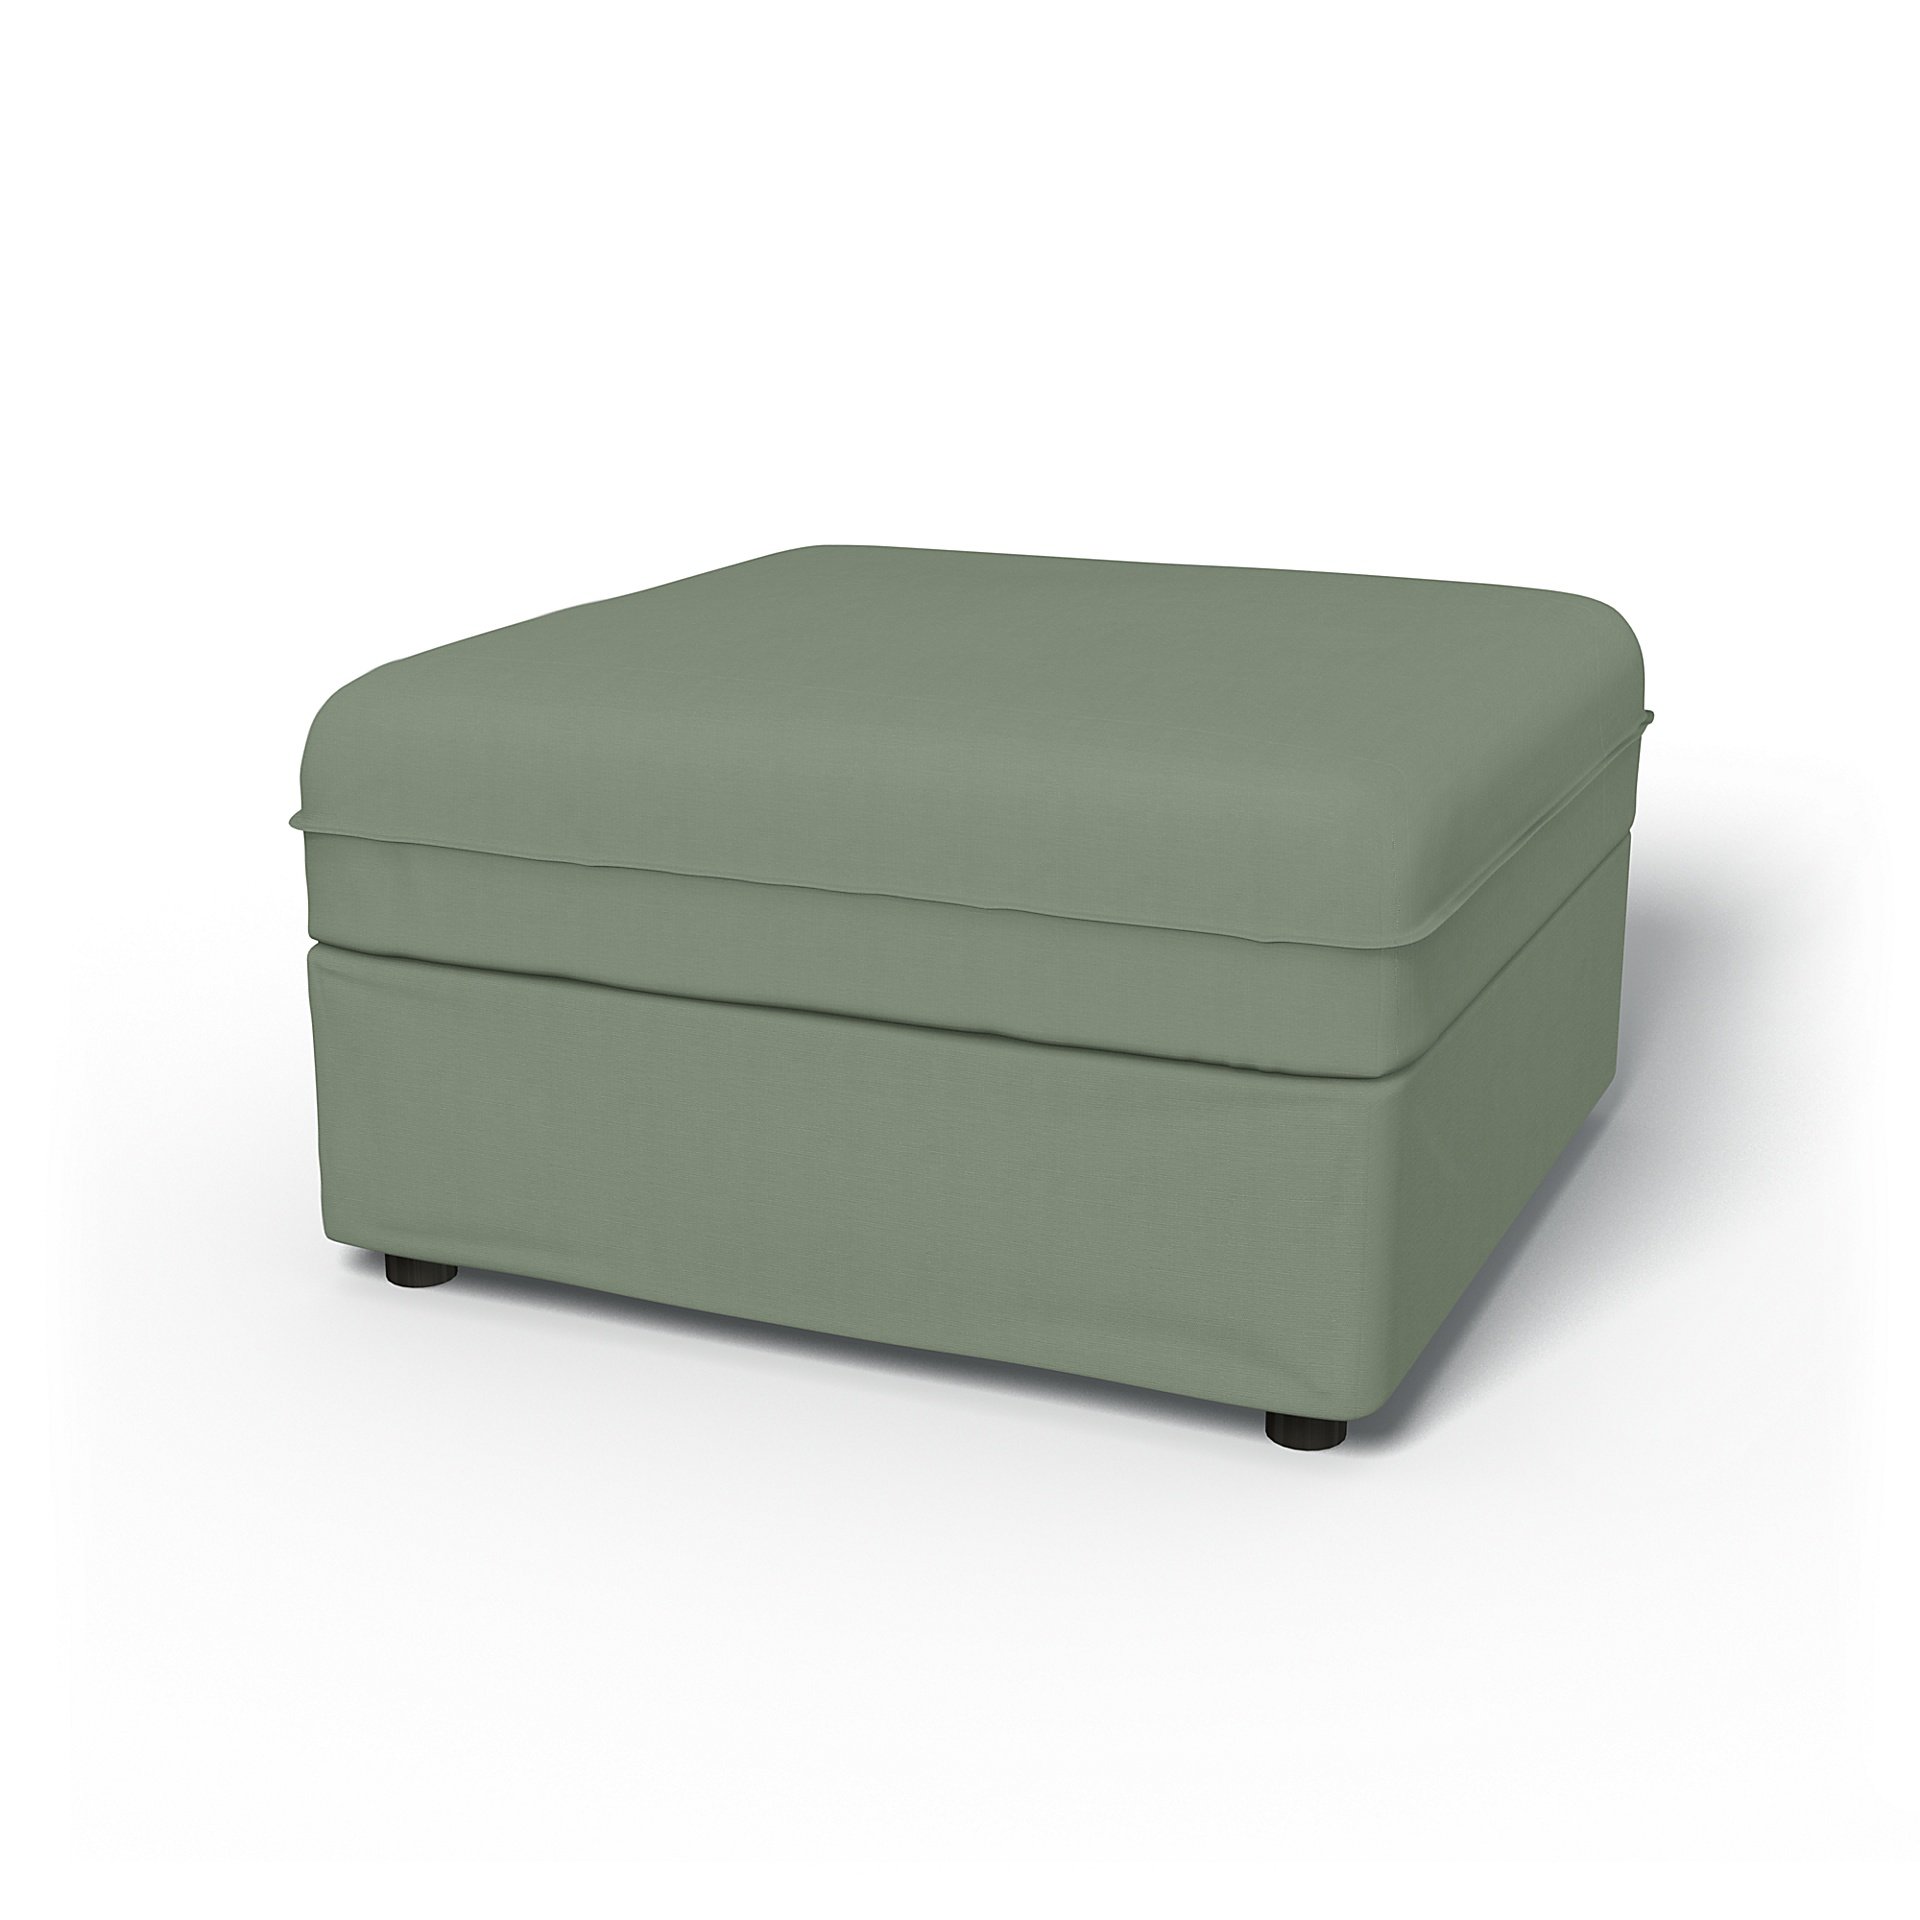 IKEA - Vallentuna Seat Module with Storage Cover 80x80cm 32x32in, Seagrass, Cotton - Bemz